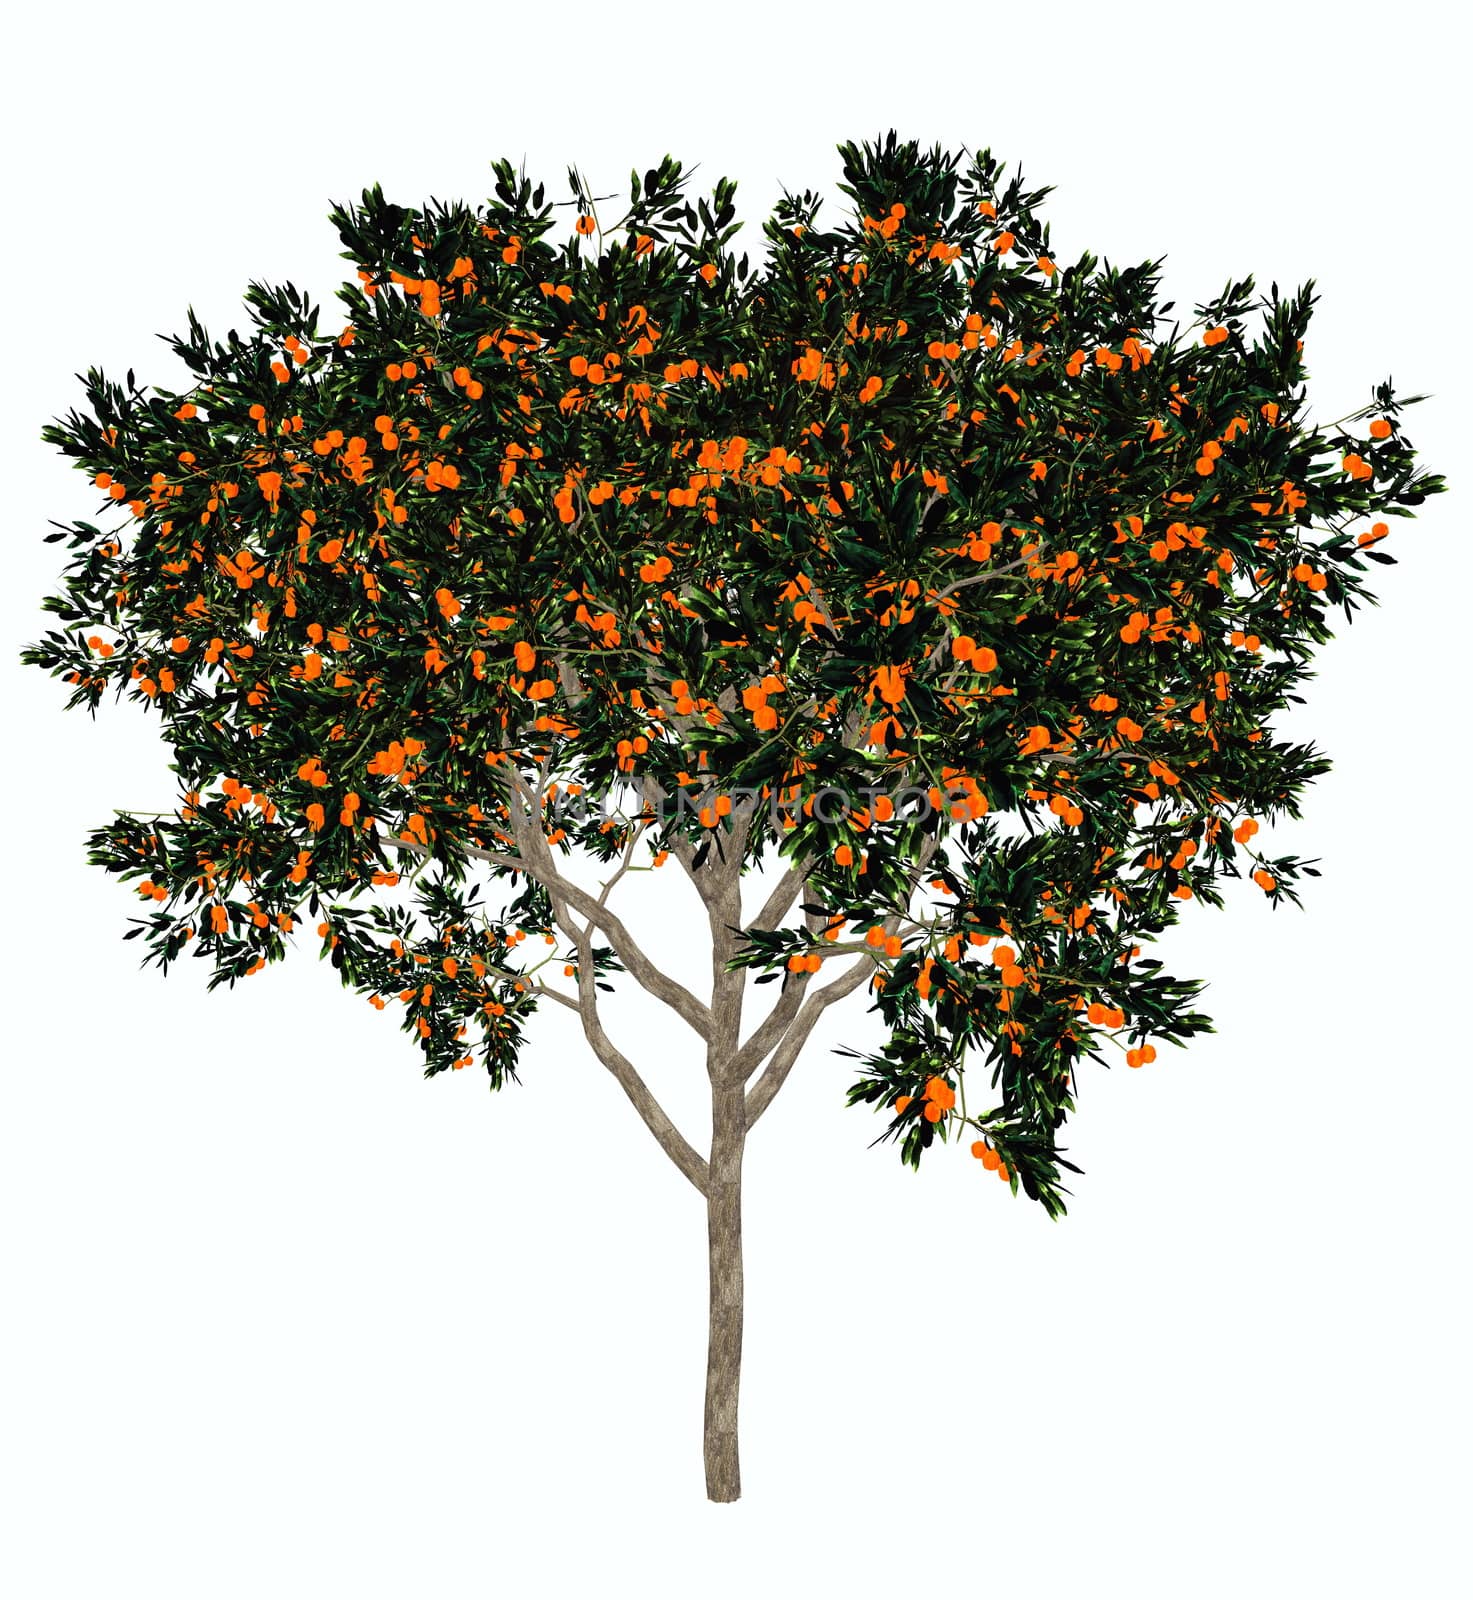 Sweet orange tree - 3D render by Elenaphotos21